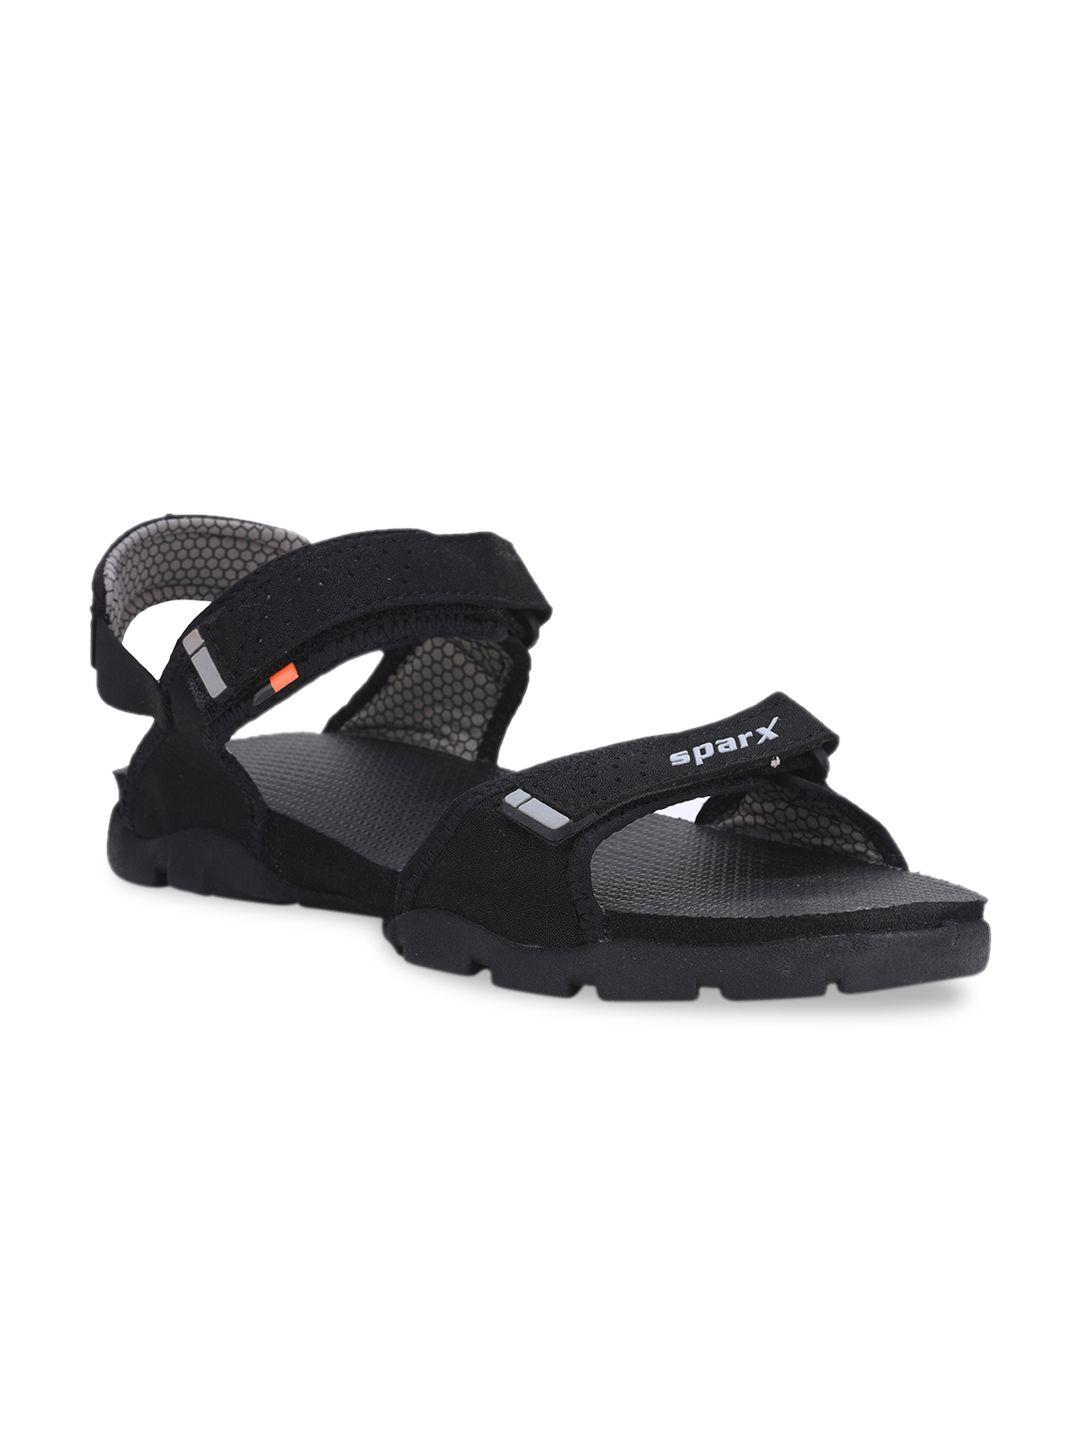 sparx men black & grey sports sandals